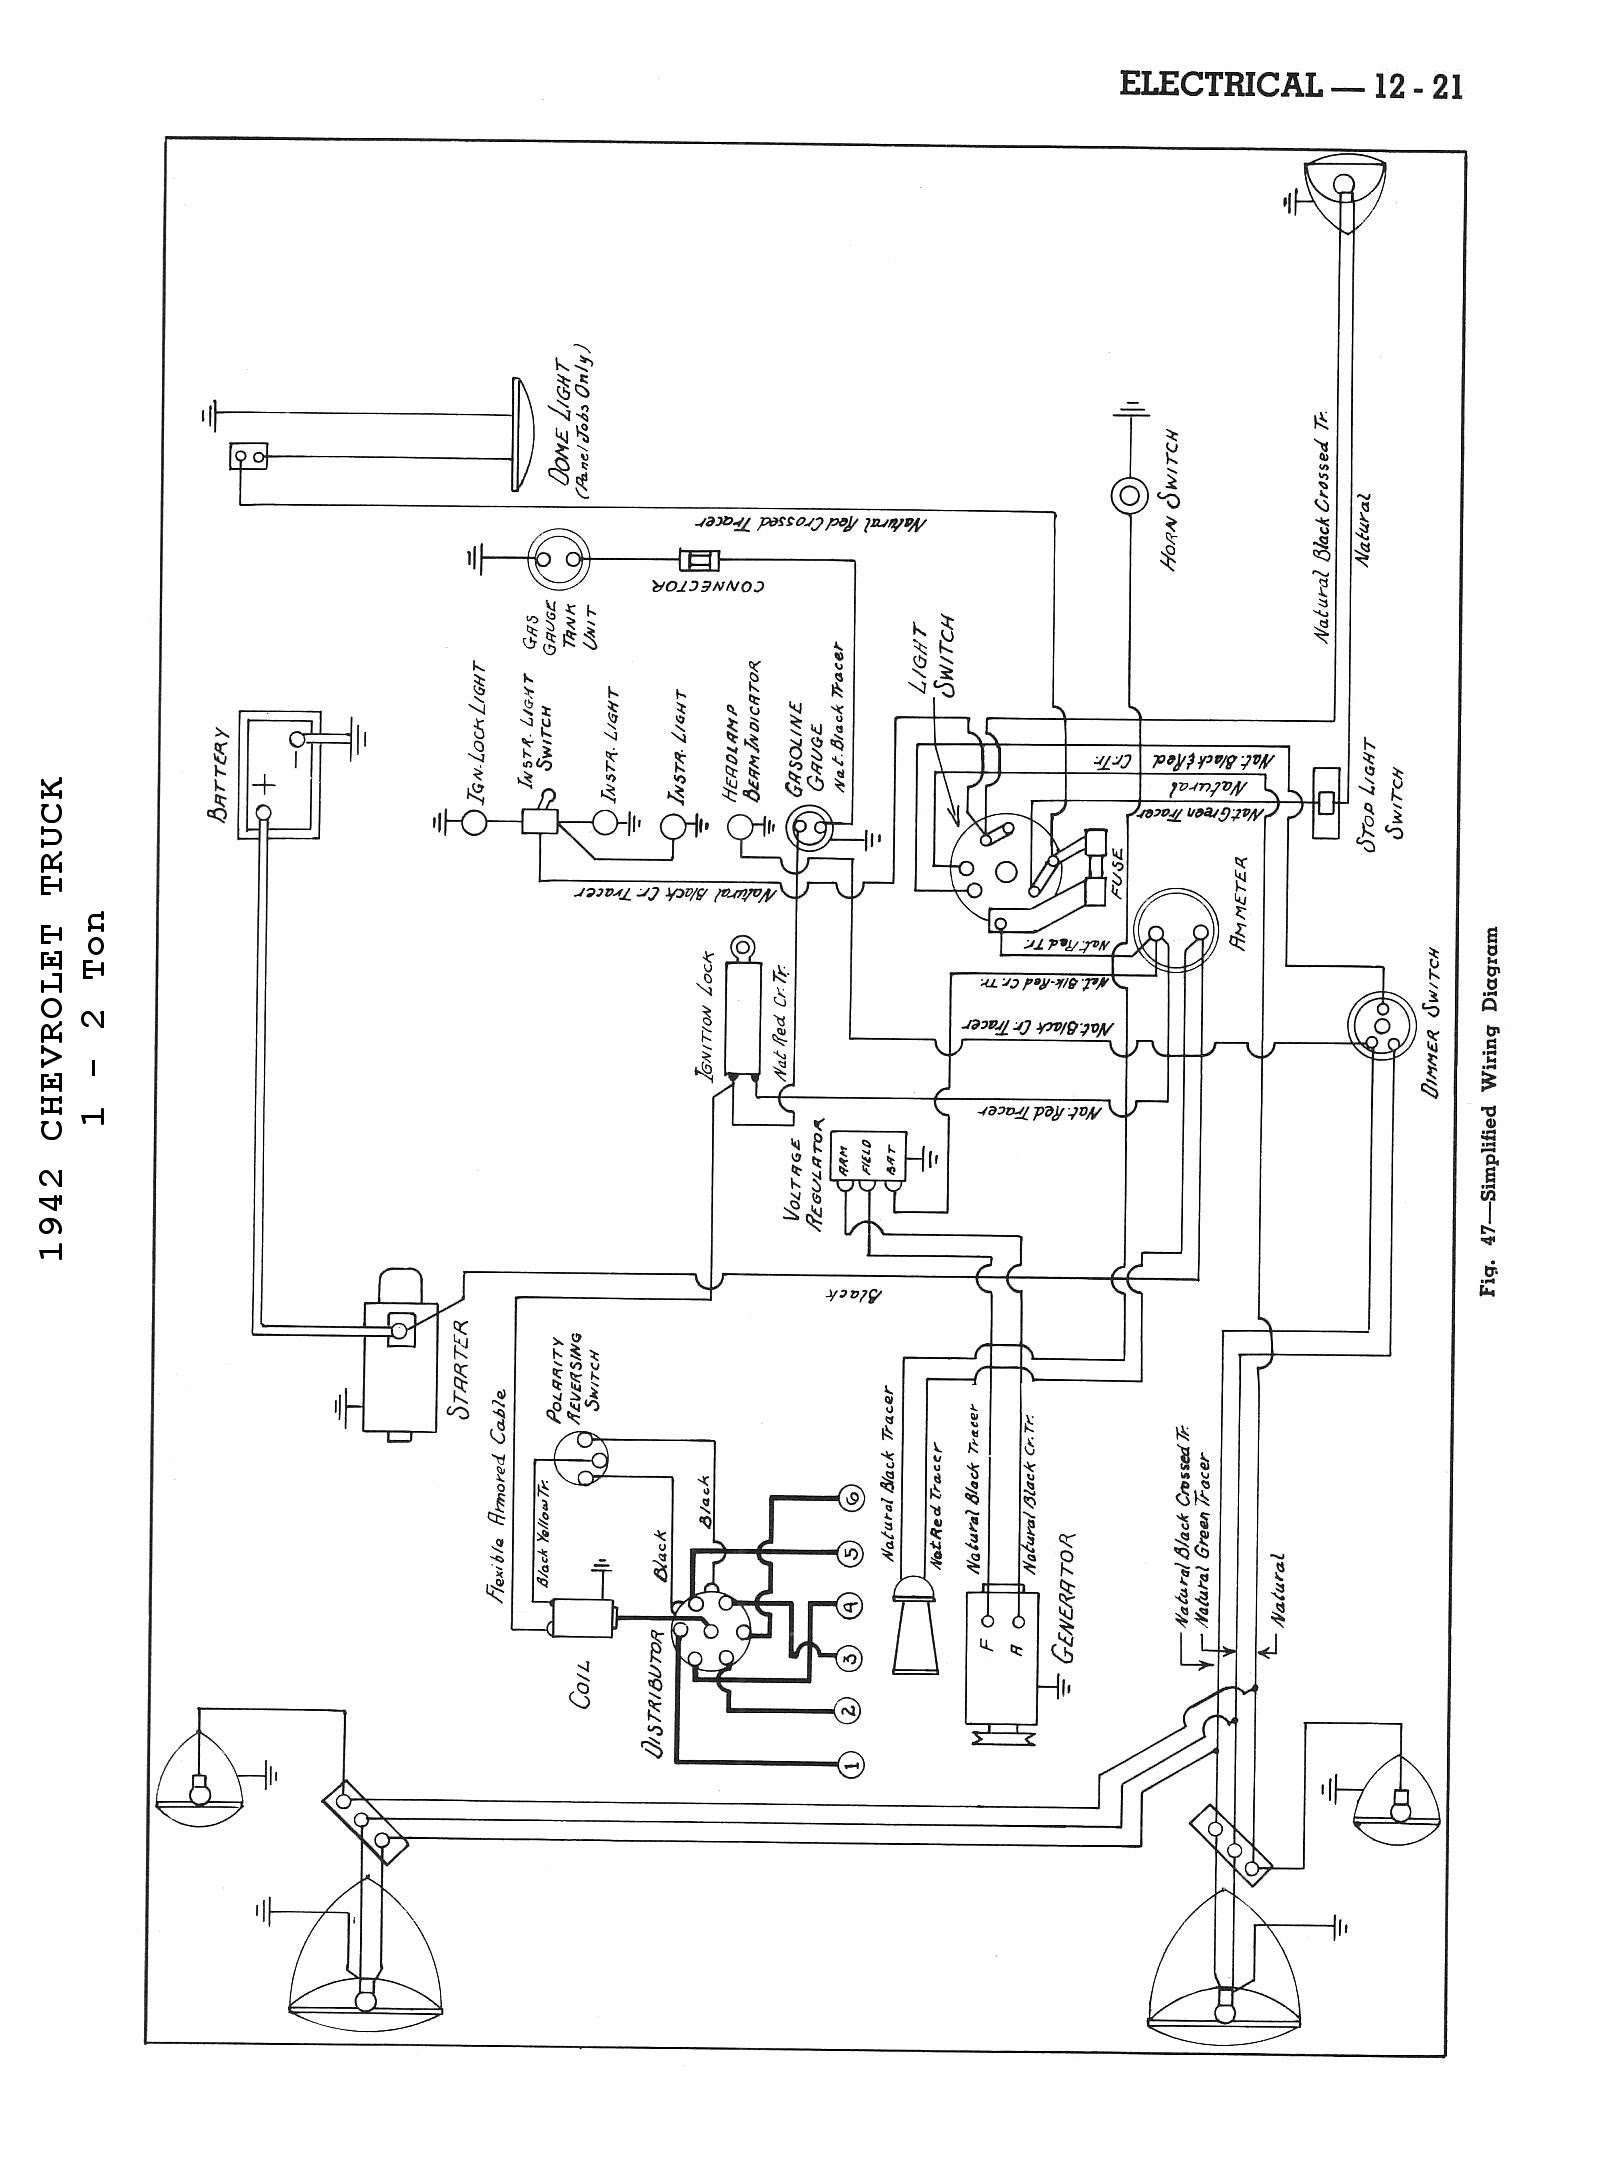 Wiring Diagram For 1959 Chevy Truck - Complete Wiring Schemas